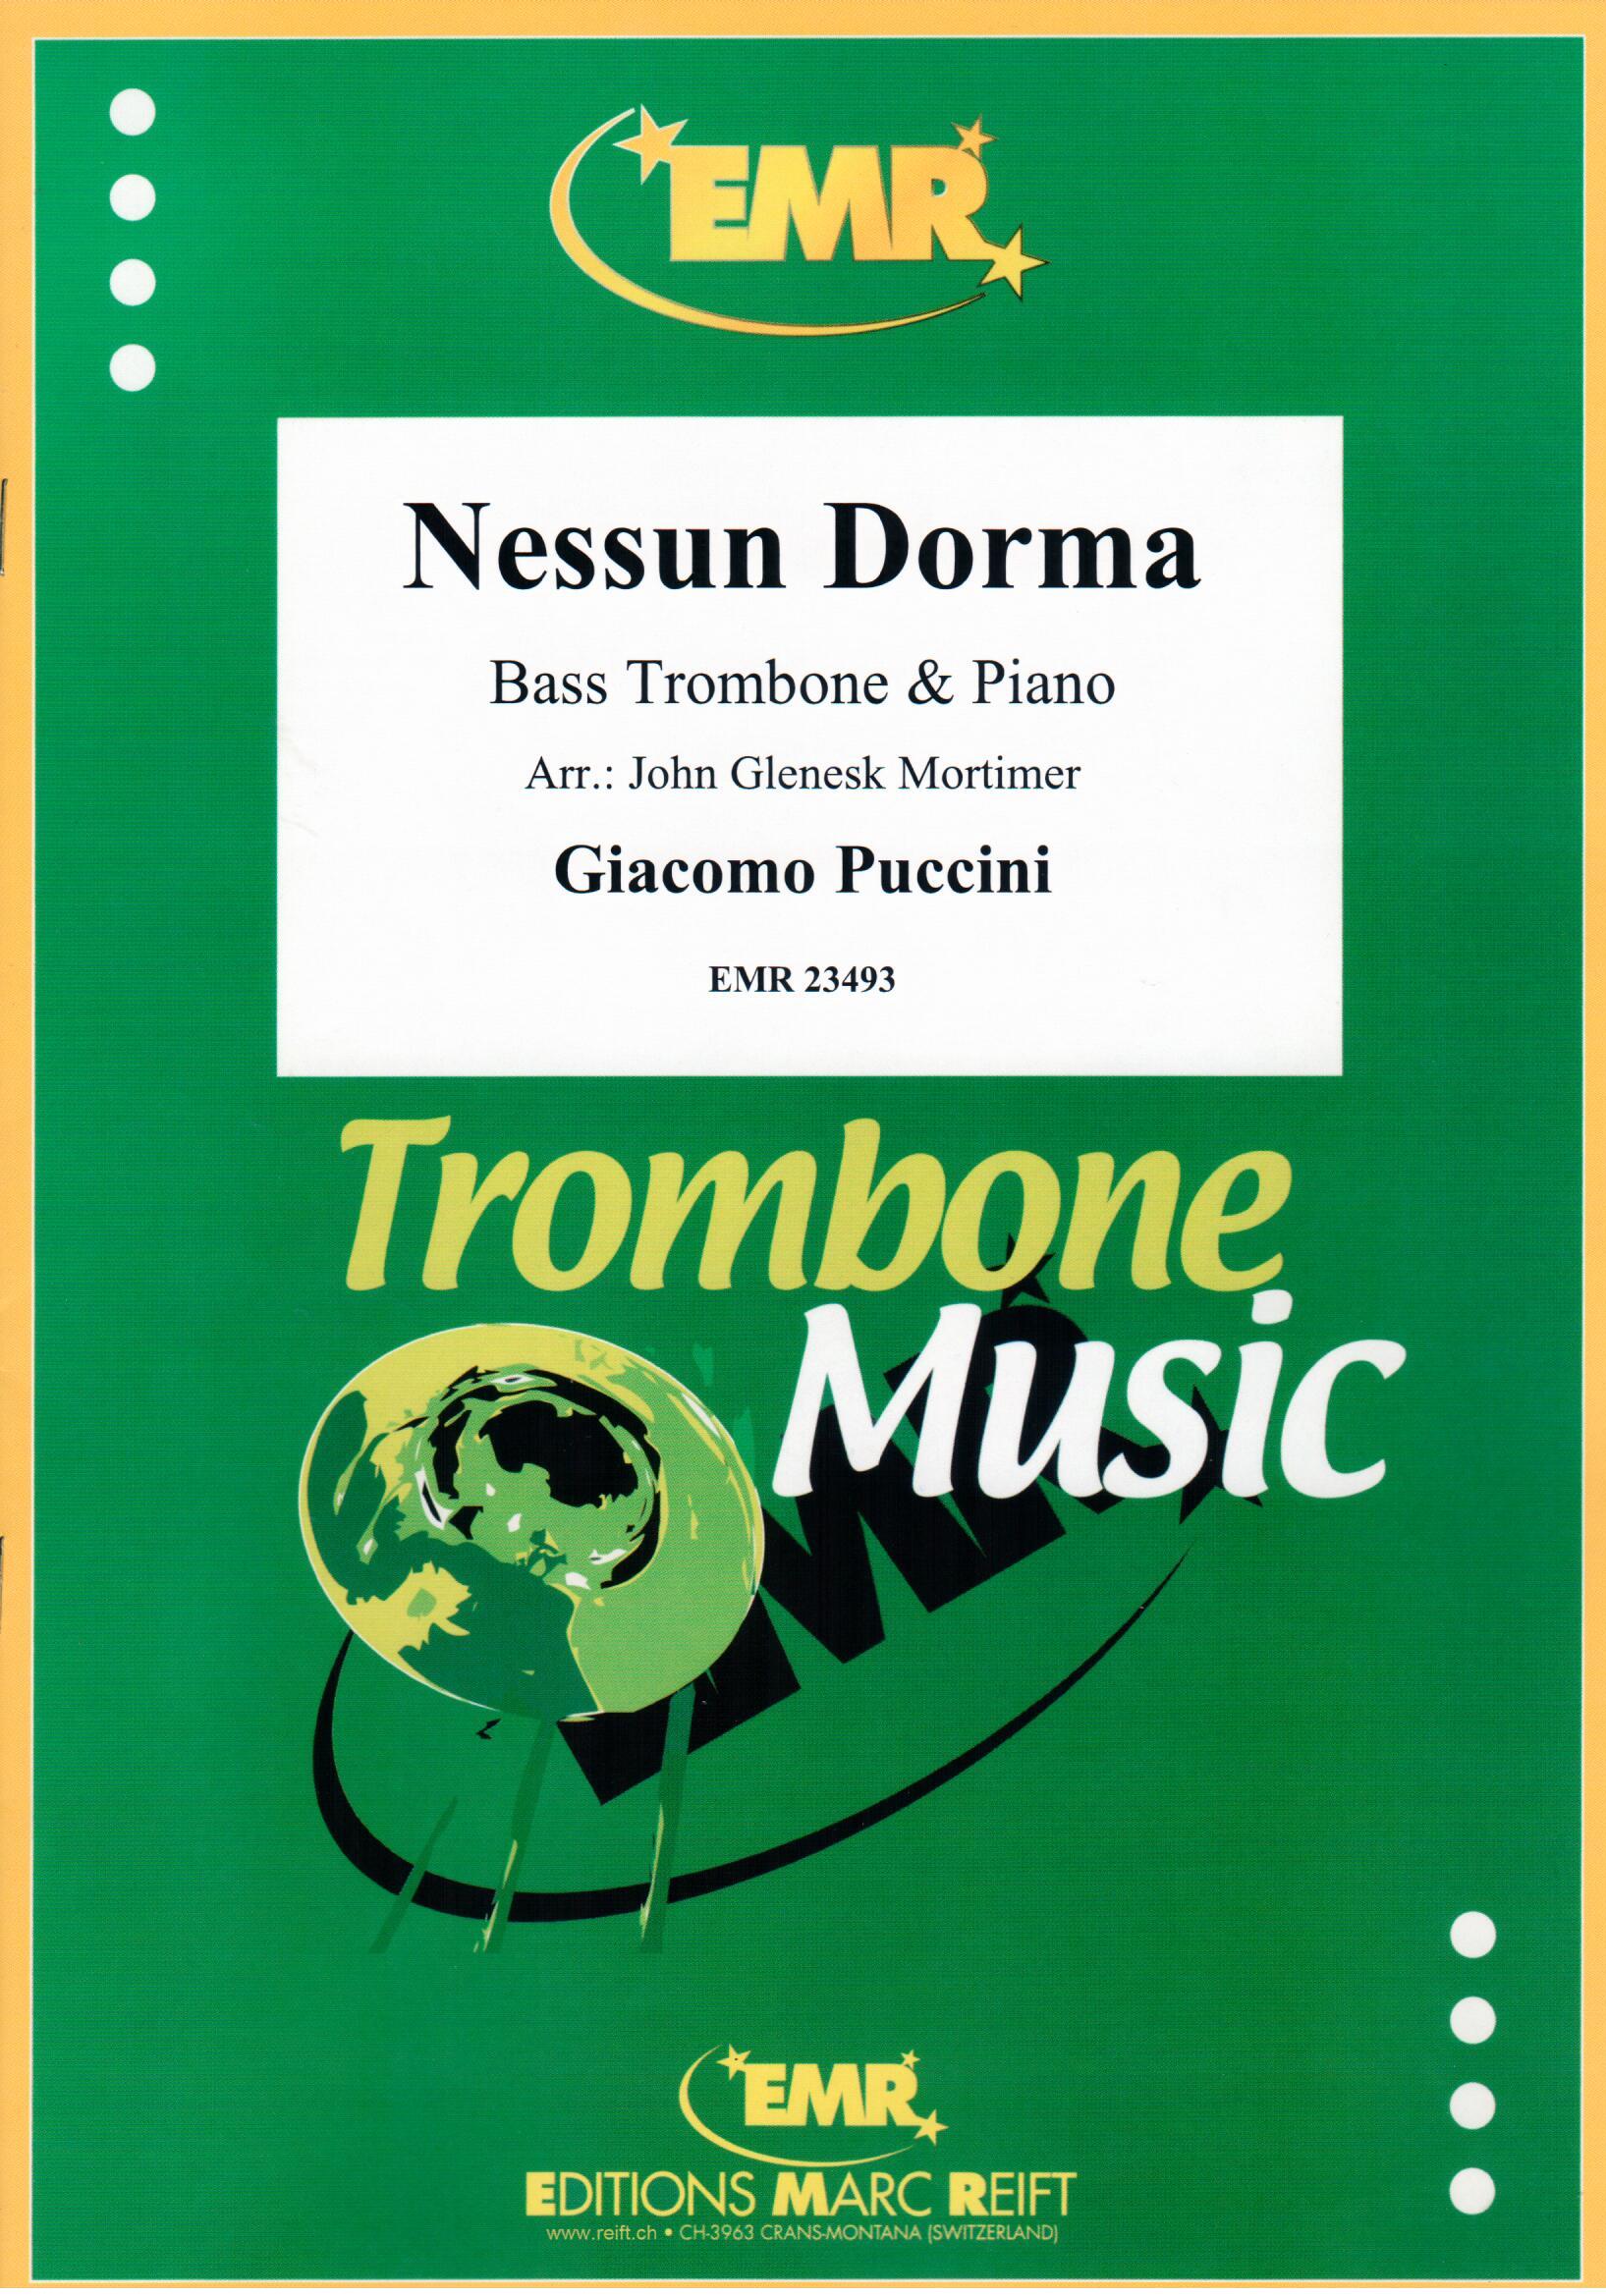 NESSUN DORMA, EMR Bass Trombone